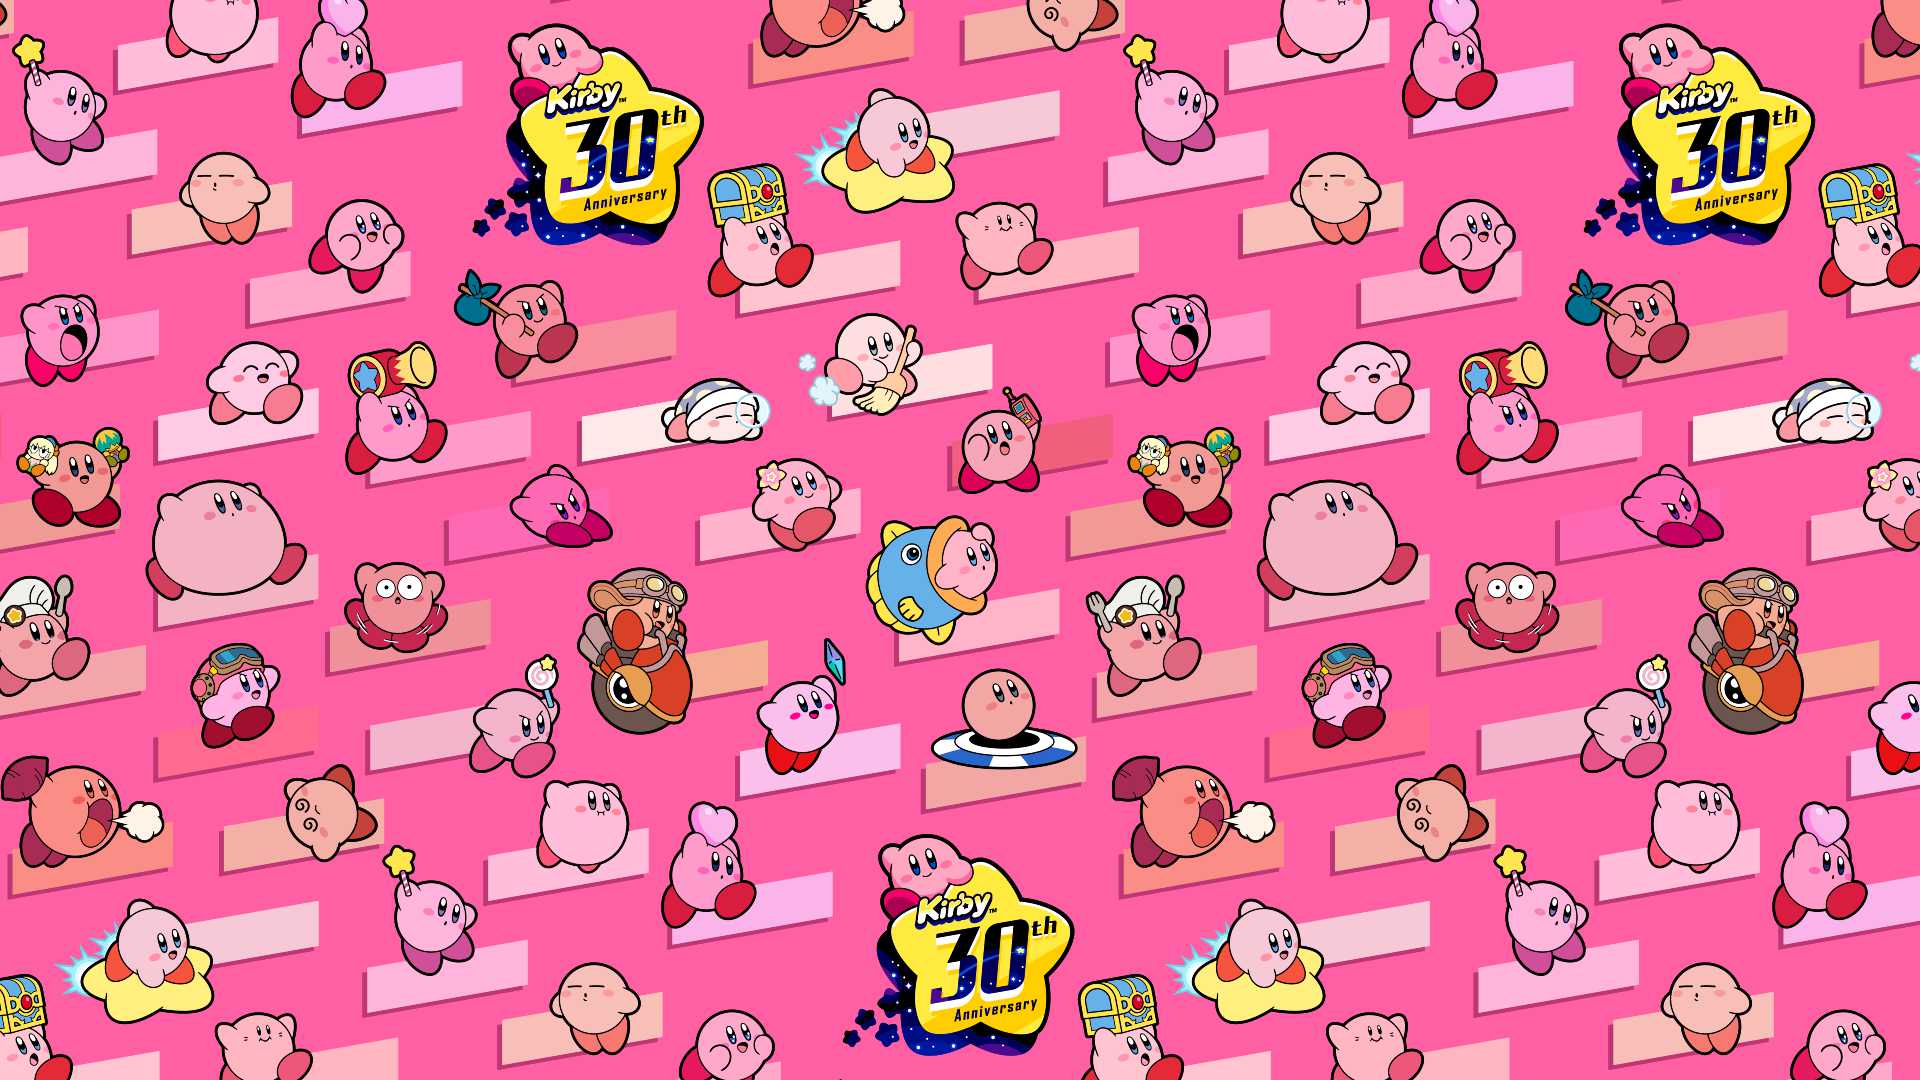 Happy Birthday, Kirby, zum 30-jährigen Jubiläum